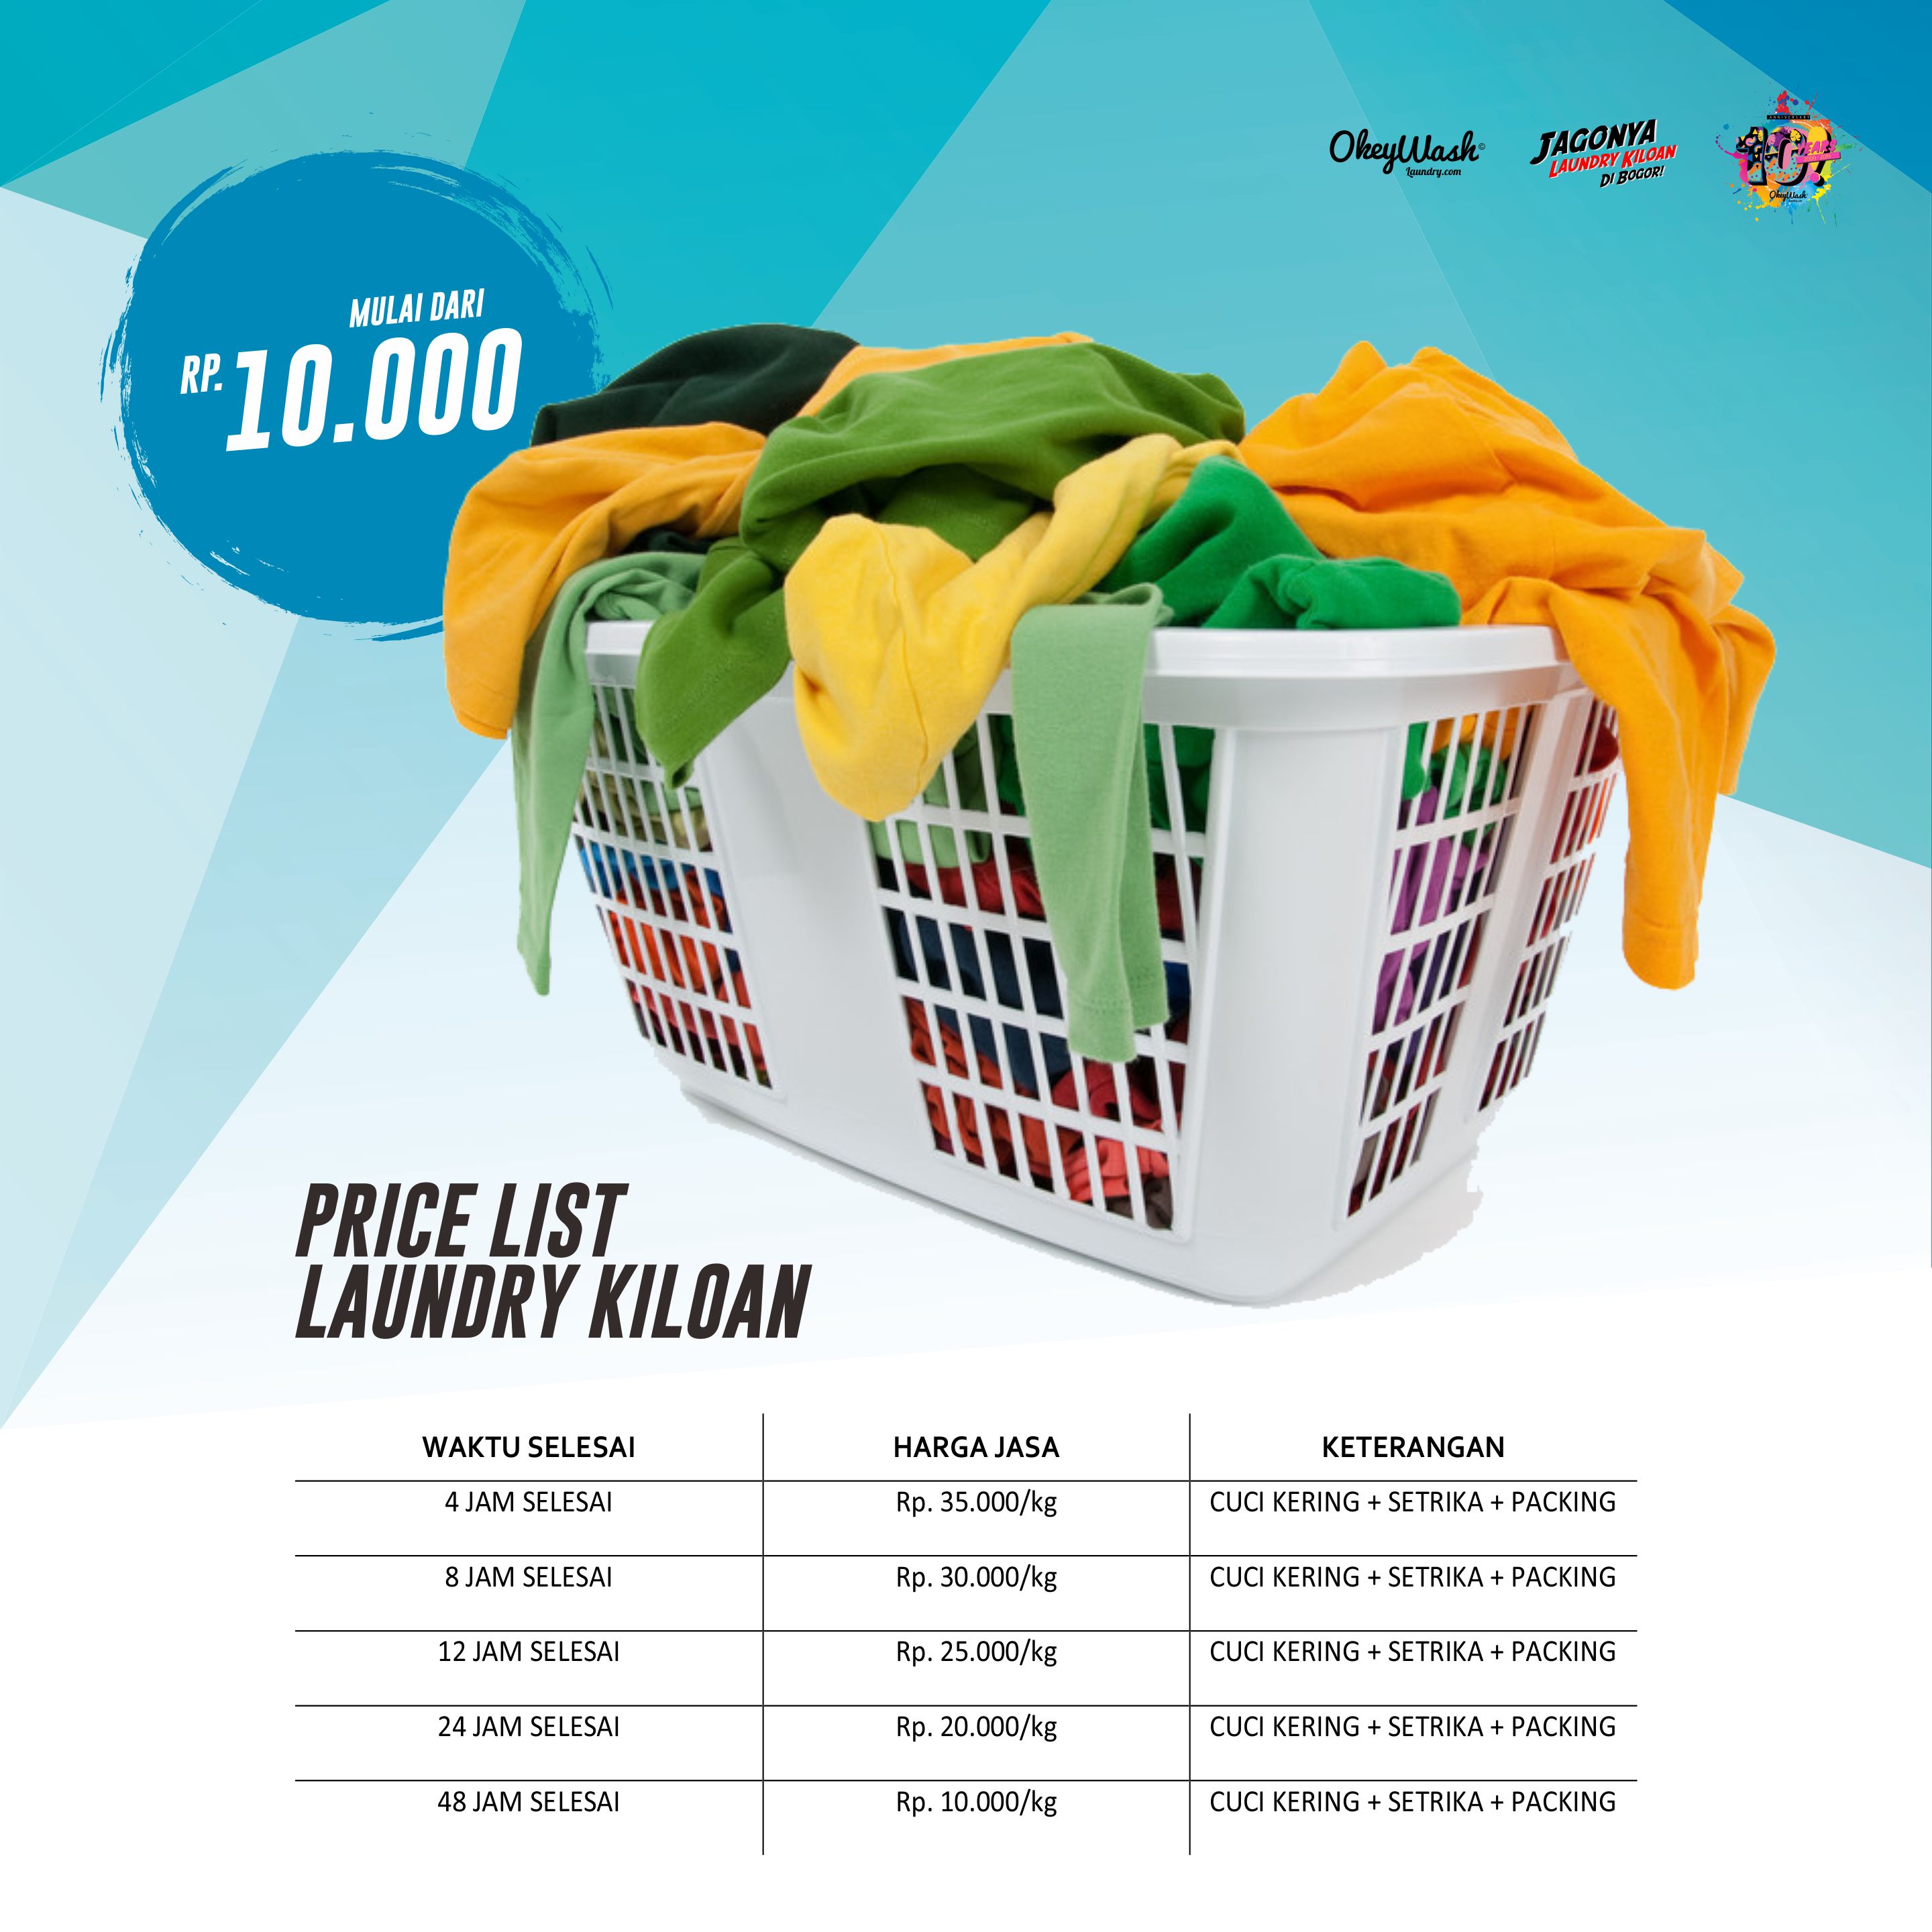 Price List Okey Wash Laundry 2019 - Laundry Kiloan